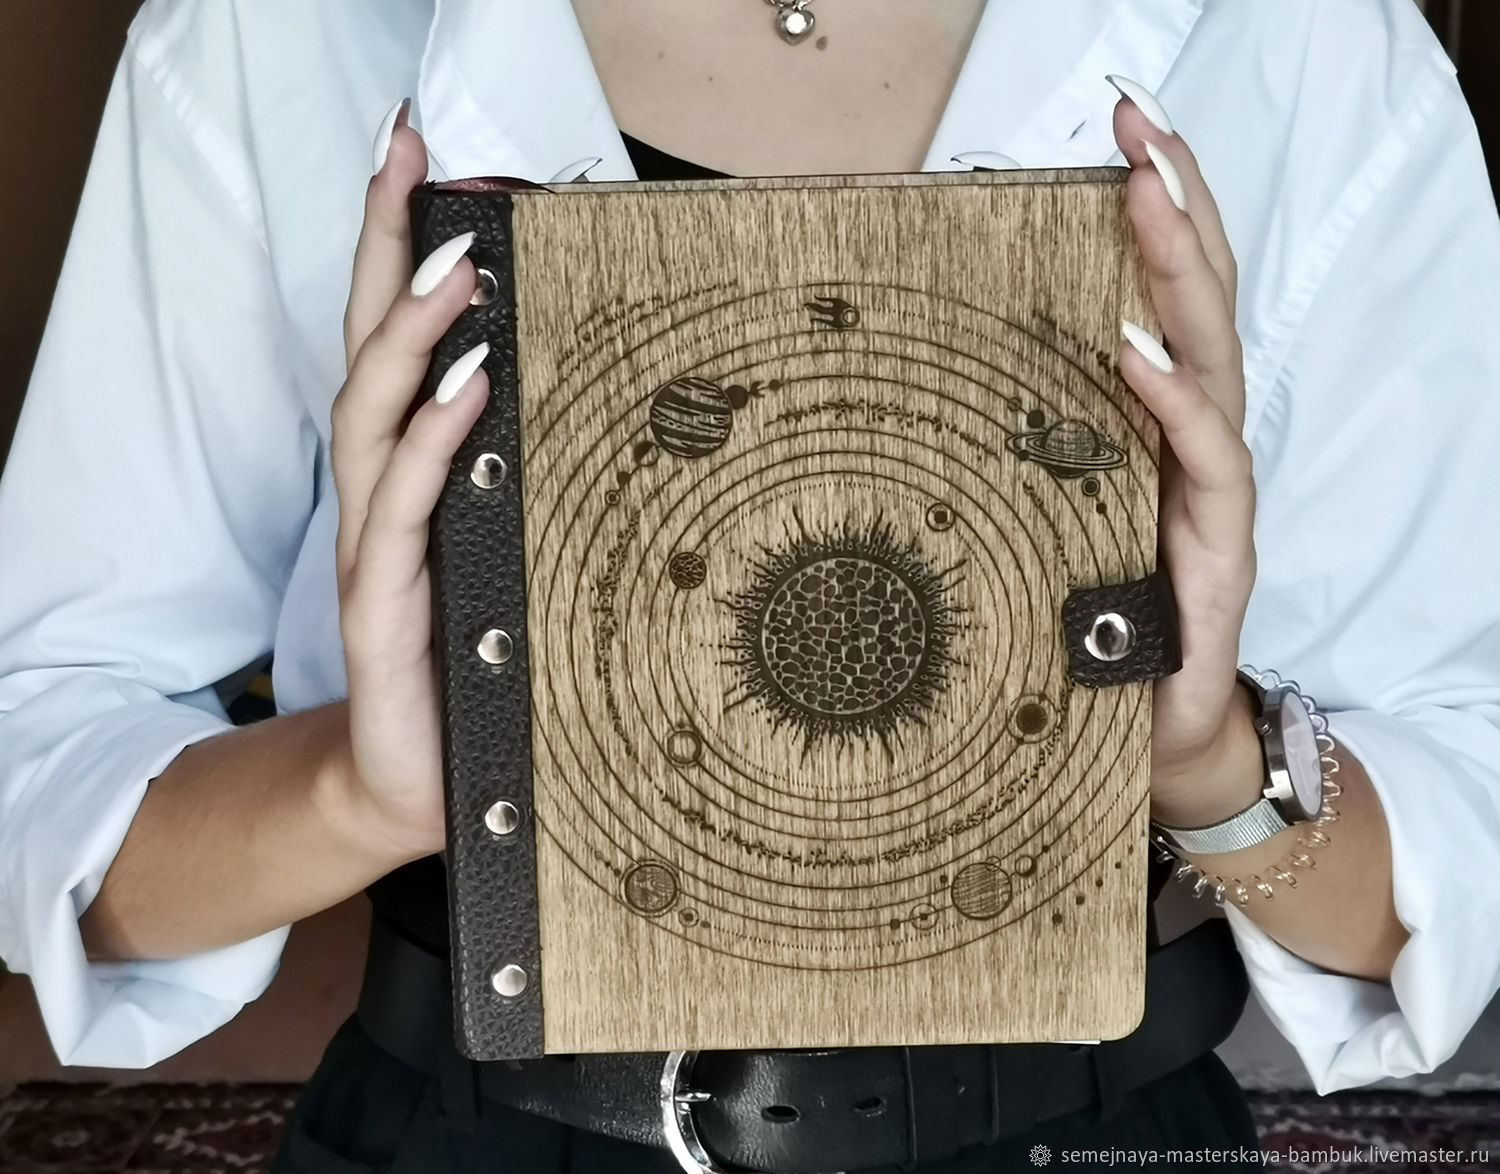 Handmade A5 wooden notebook with leather binding, Notebooks, Krasnodar,  Фото №1